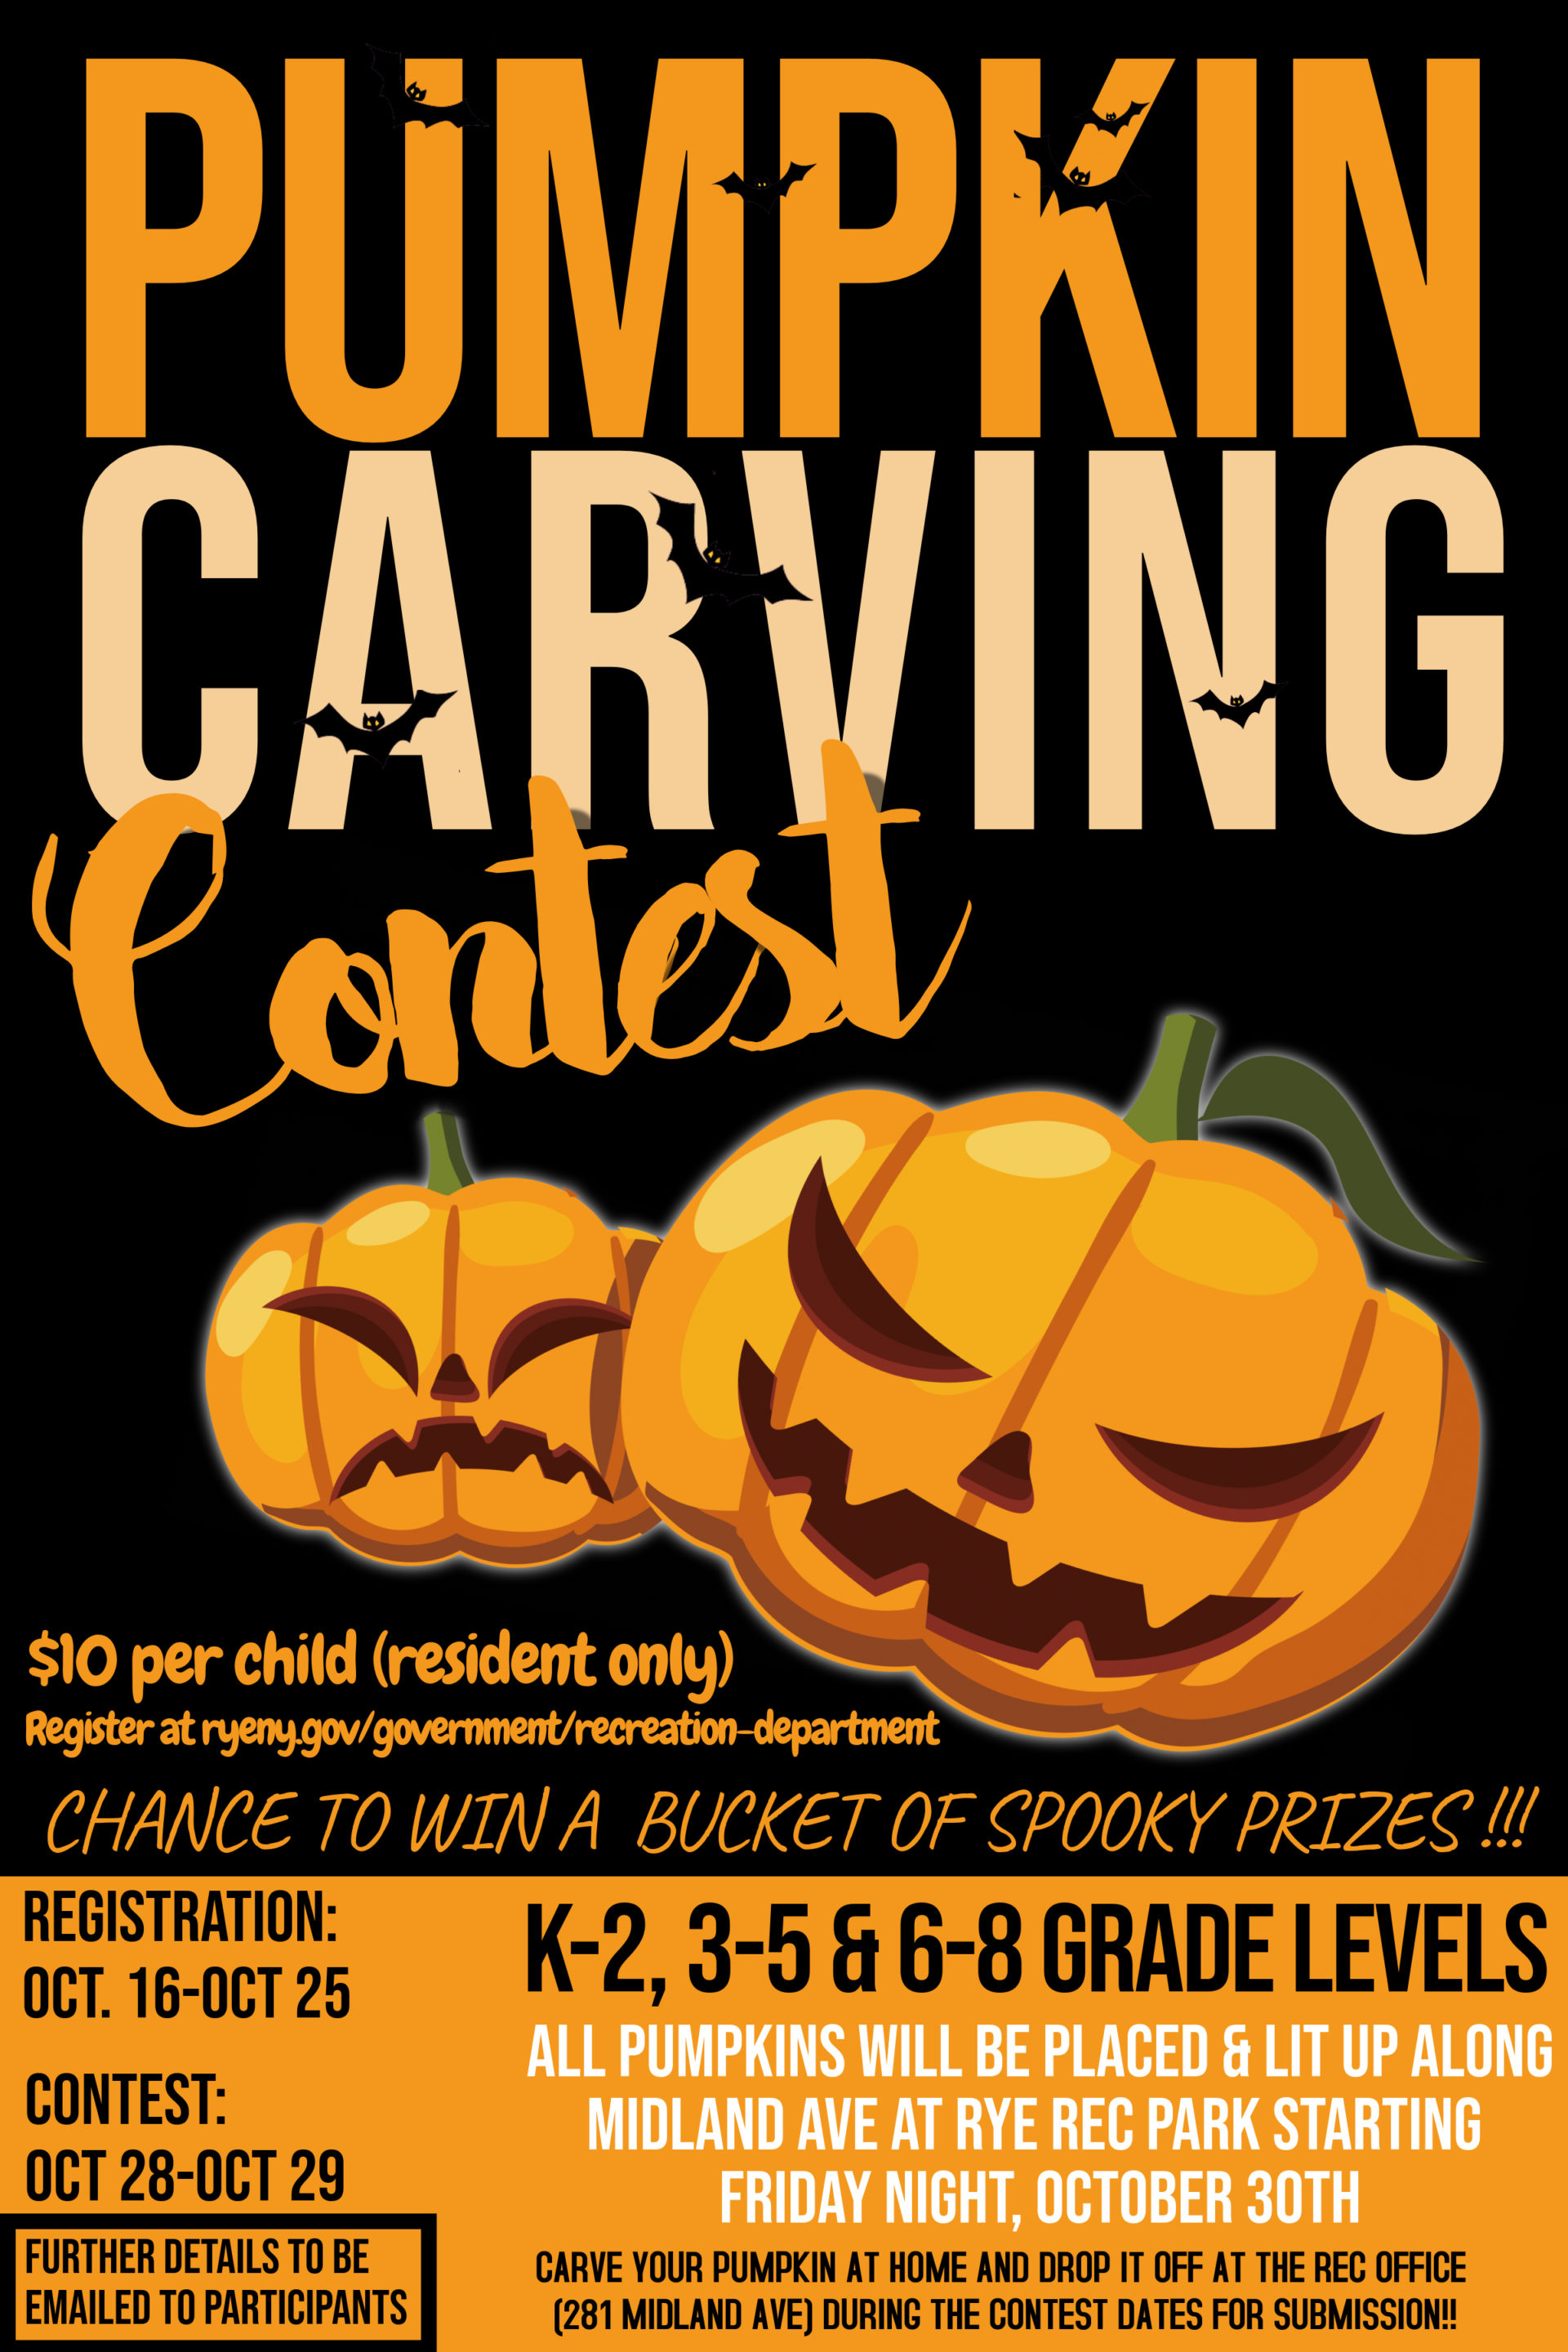 Pumpkin Carving Contest - Registration Opens Friday - MyRye.com